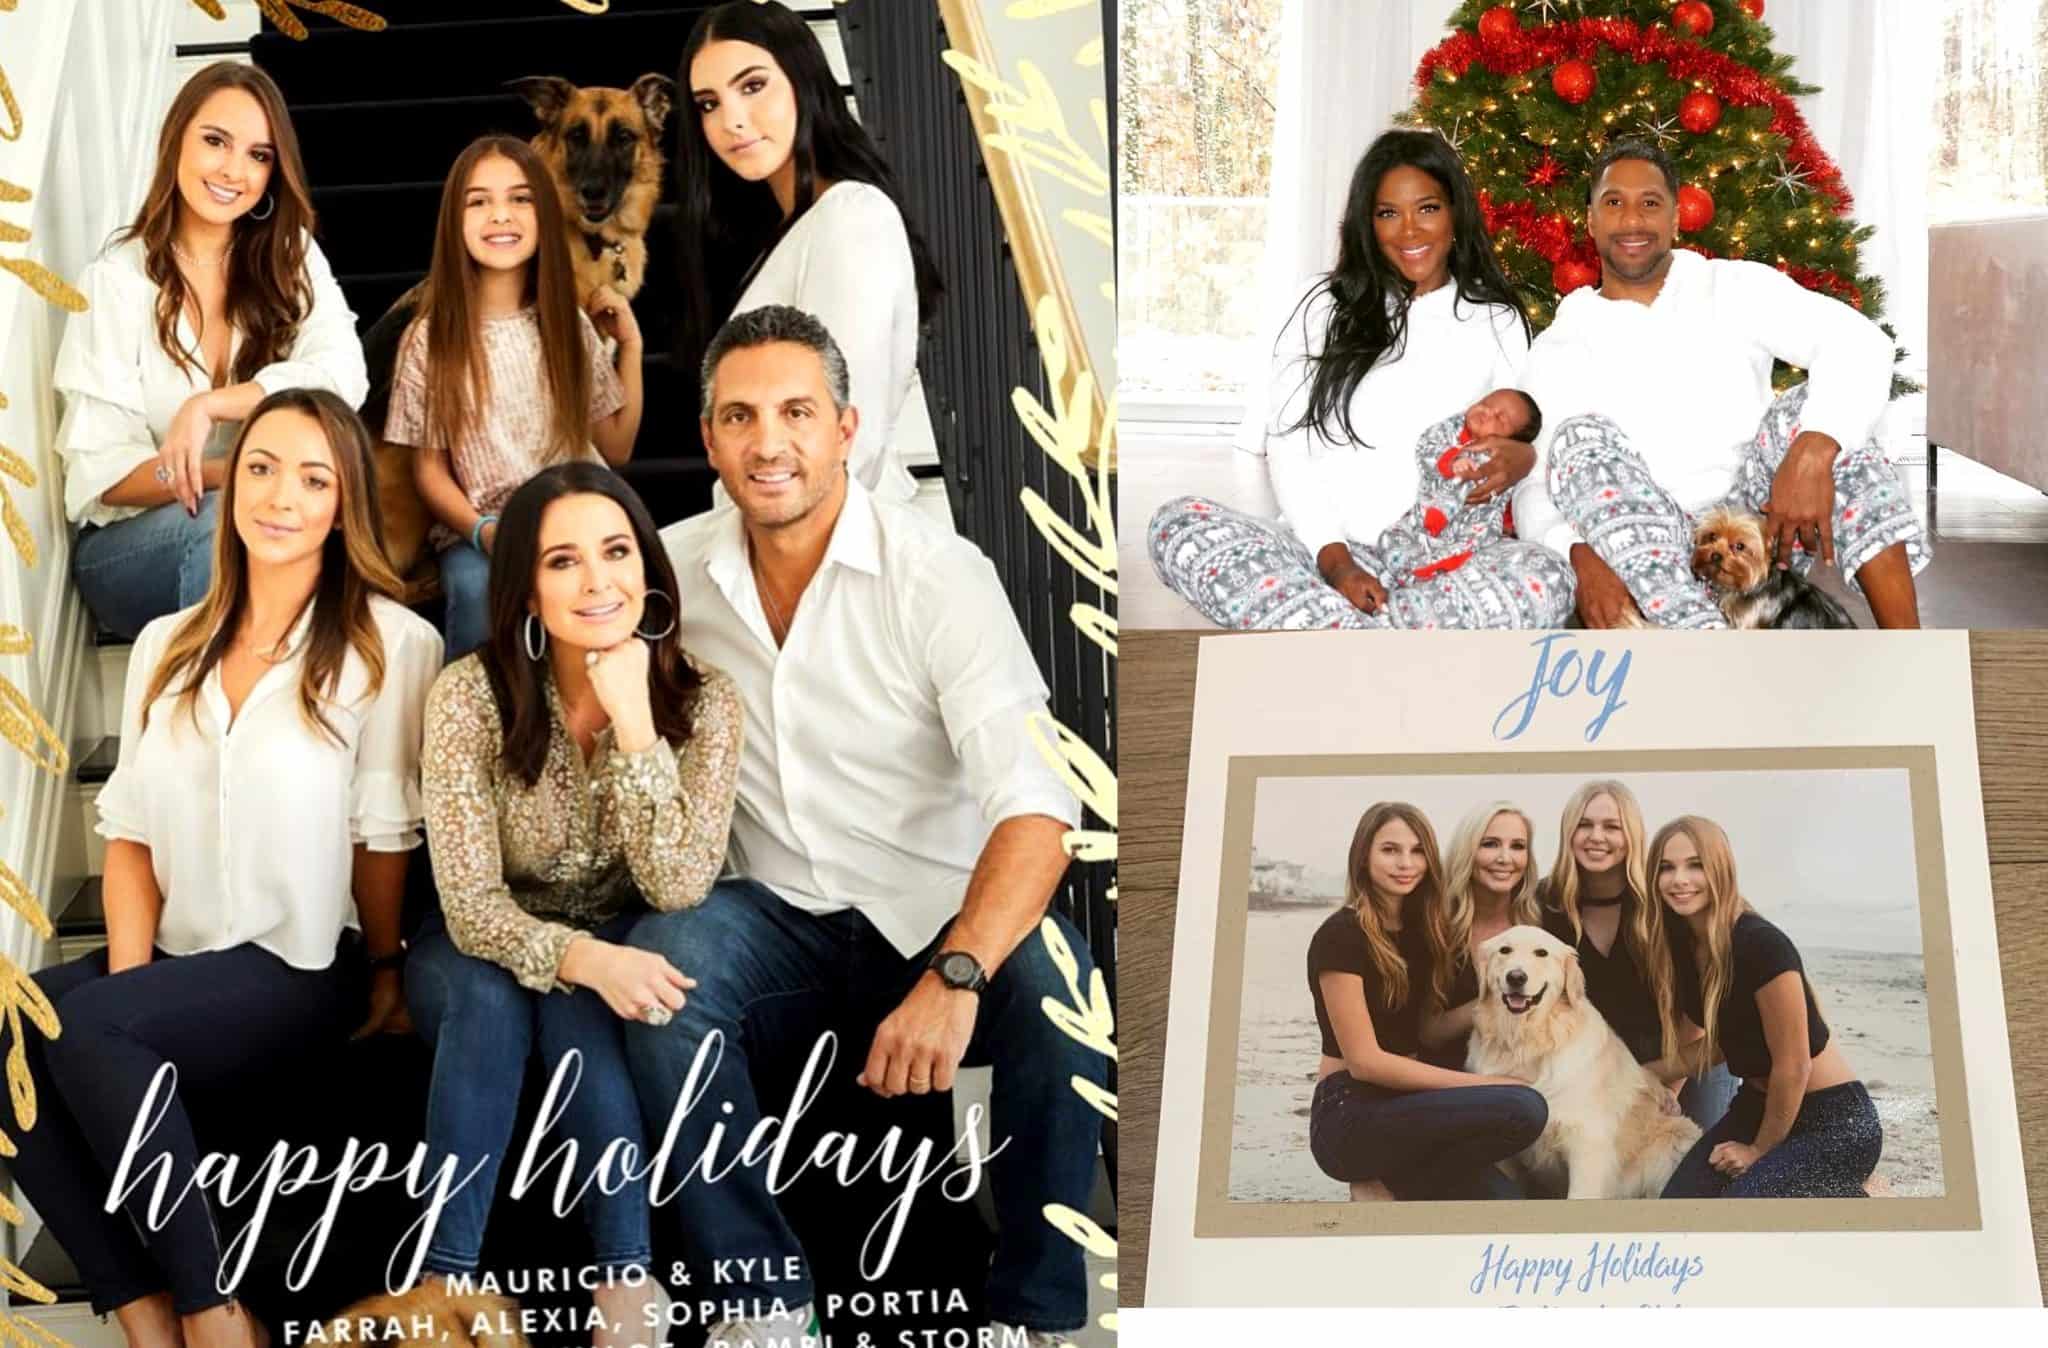 Bravo Stars Christmas Cards Photo - Kyle Richards, Kenya Moore and Shannon Beador